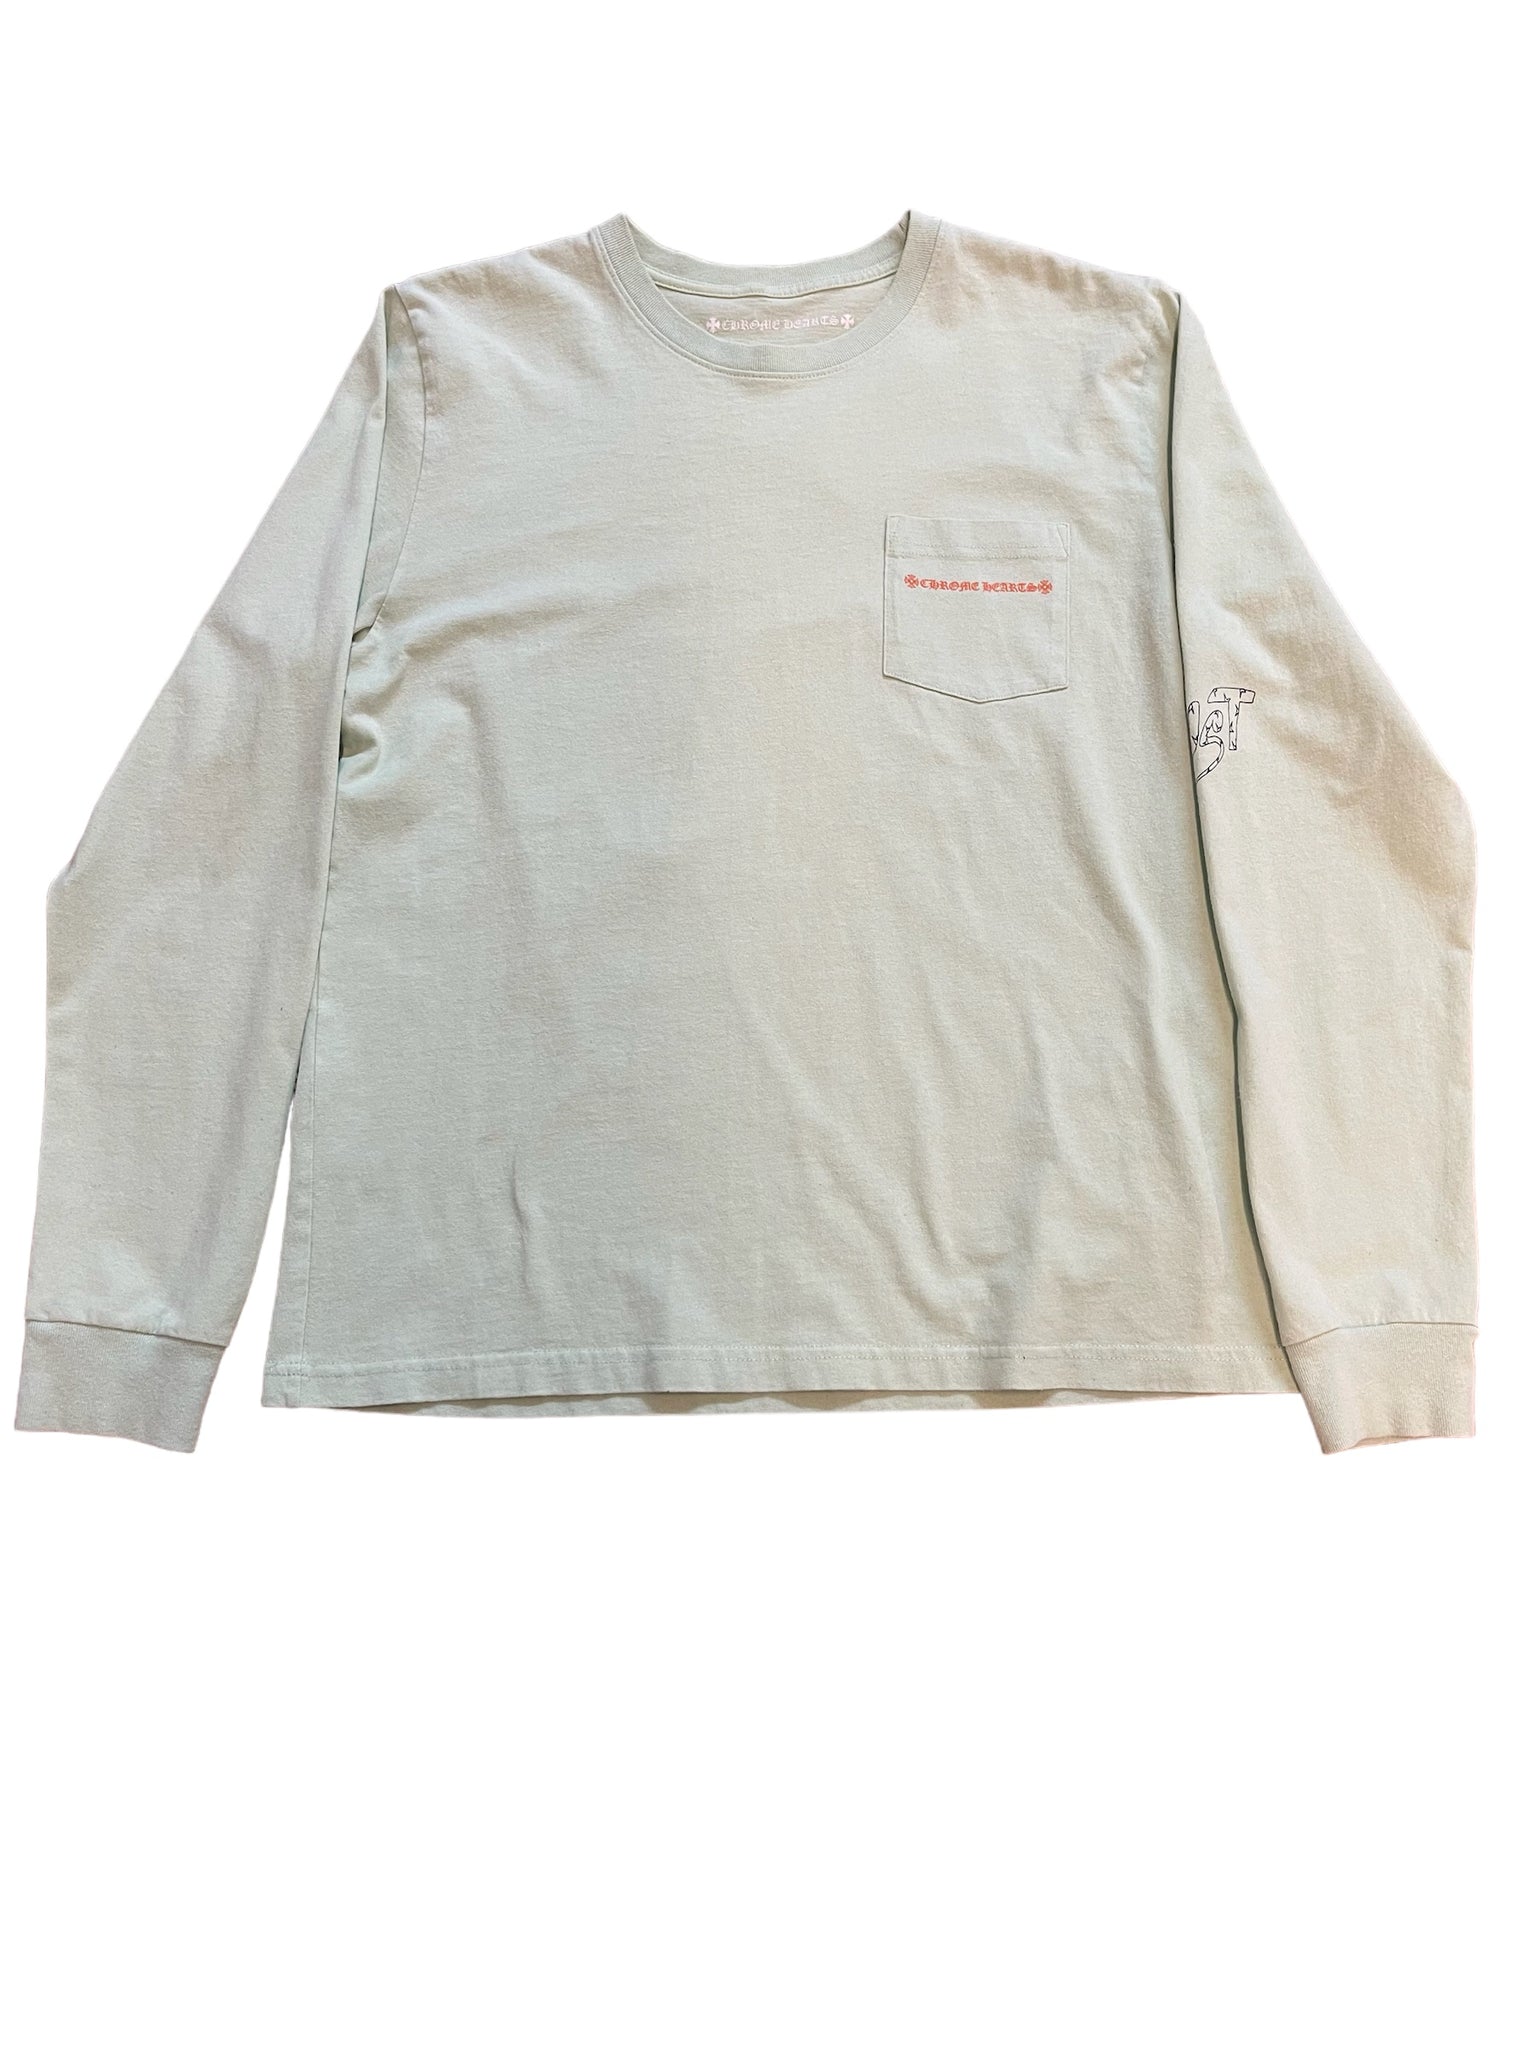 Chrome Hearts Lust Longsleeve Shirt "Mint" (Pre-Owned)